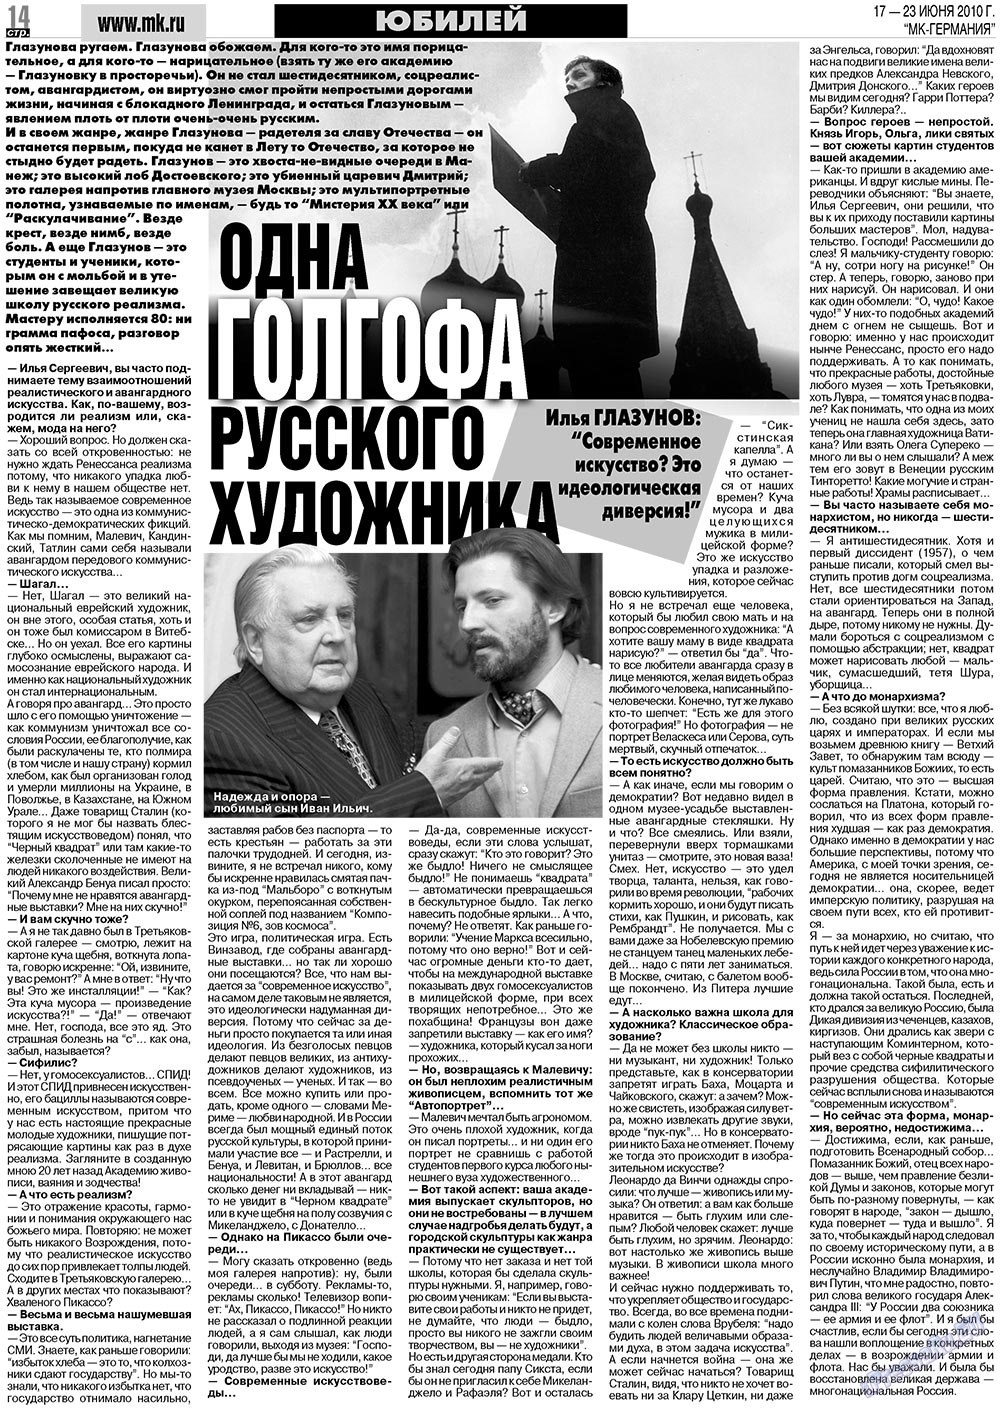 МК-Германия, газета. 2010 №25 стр.14